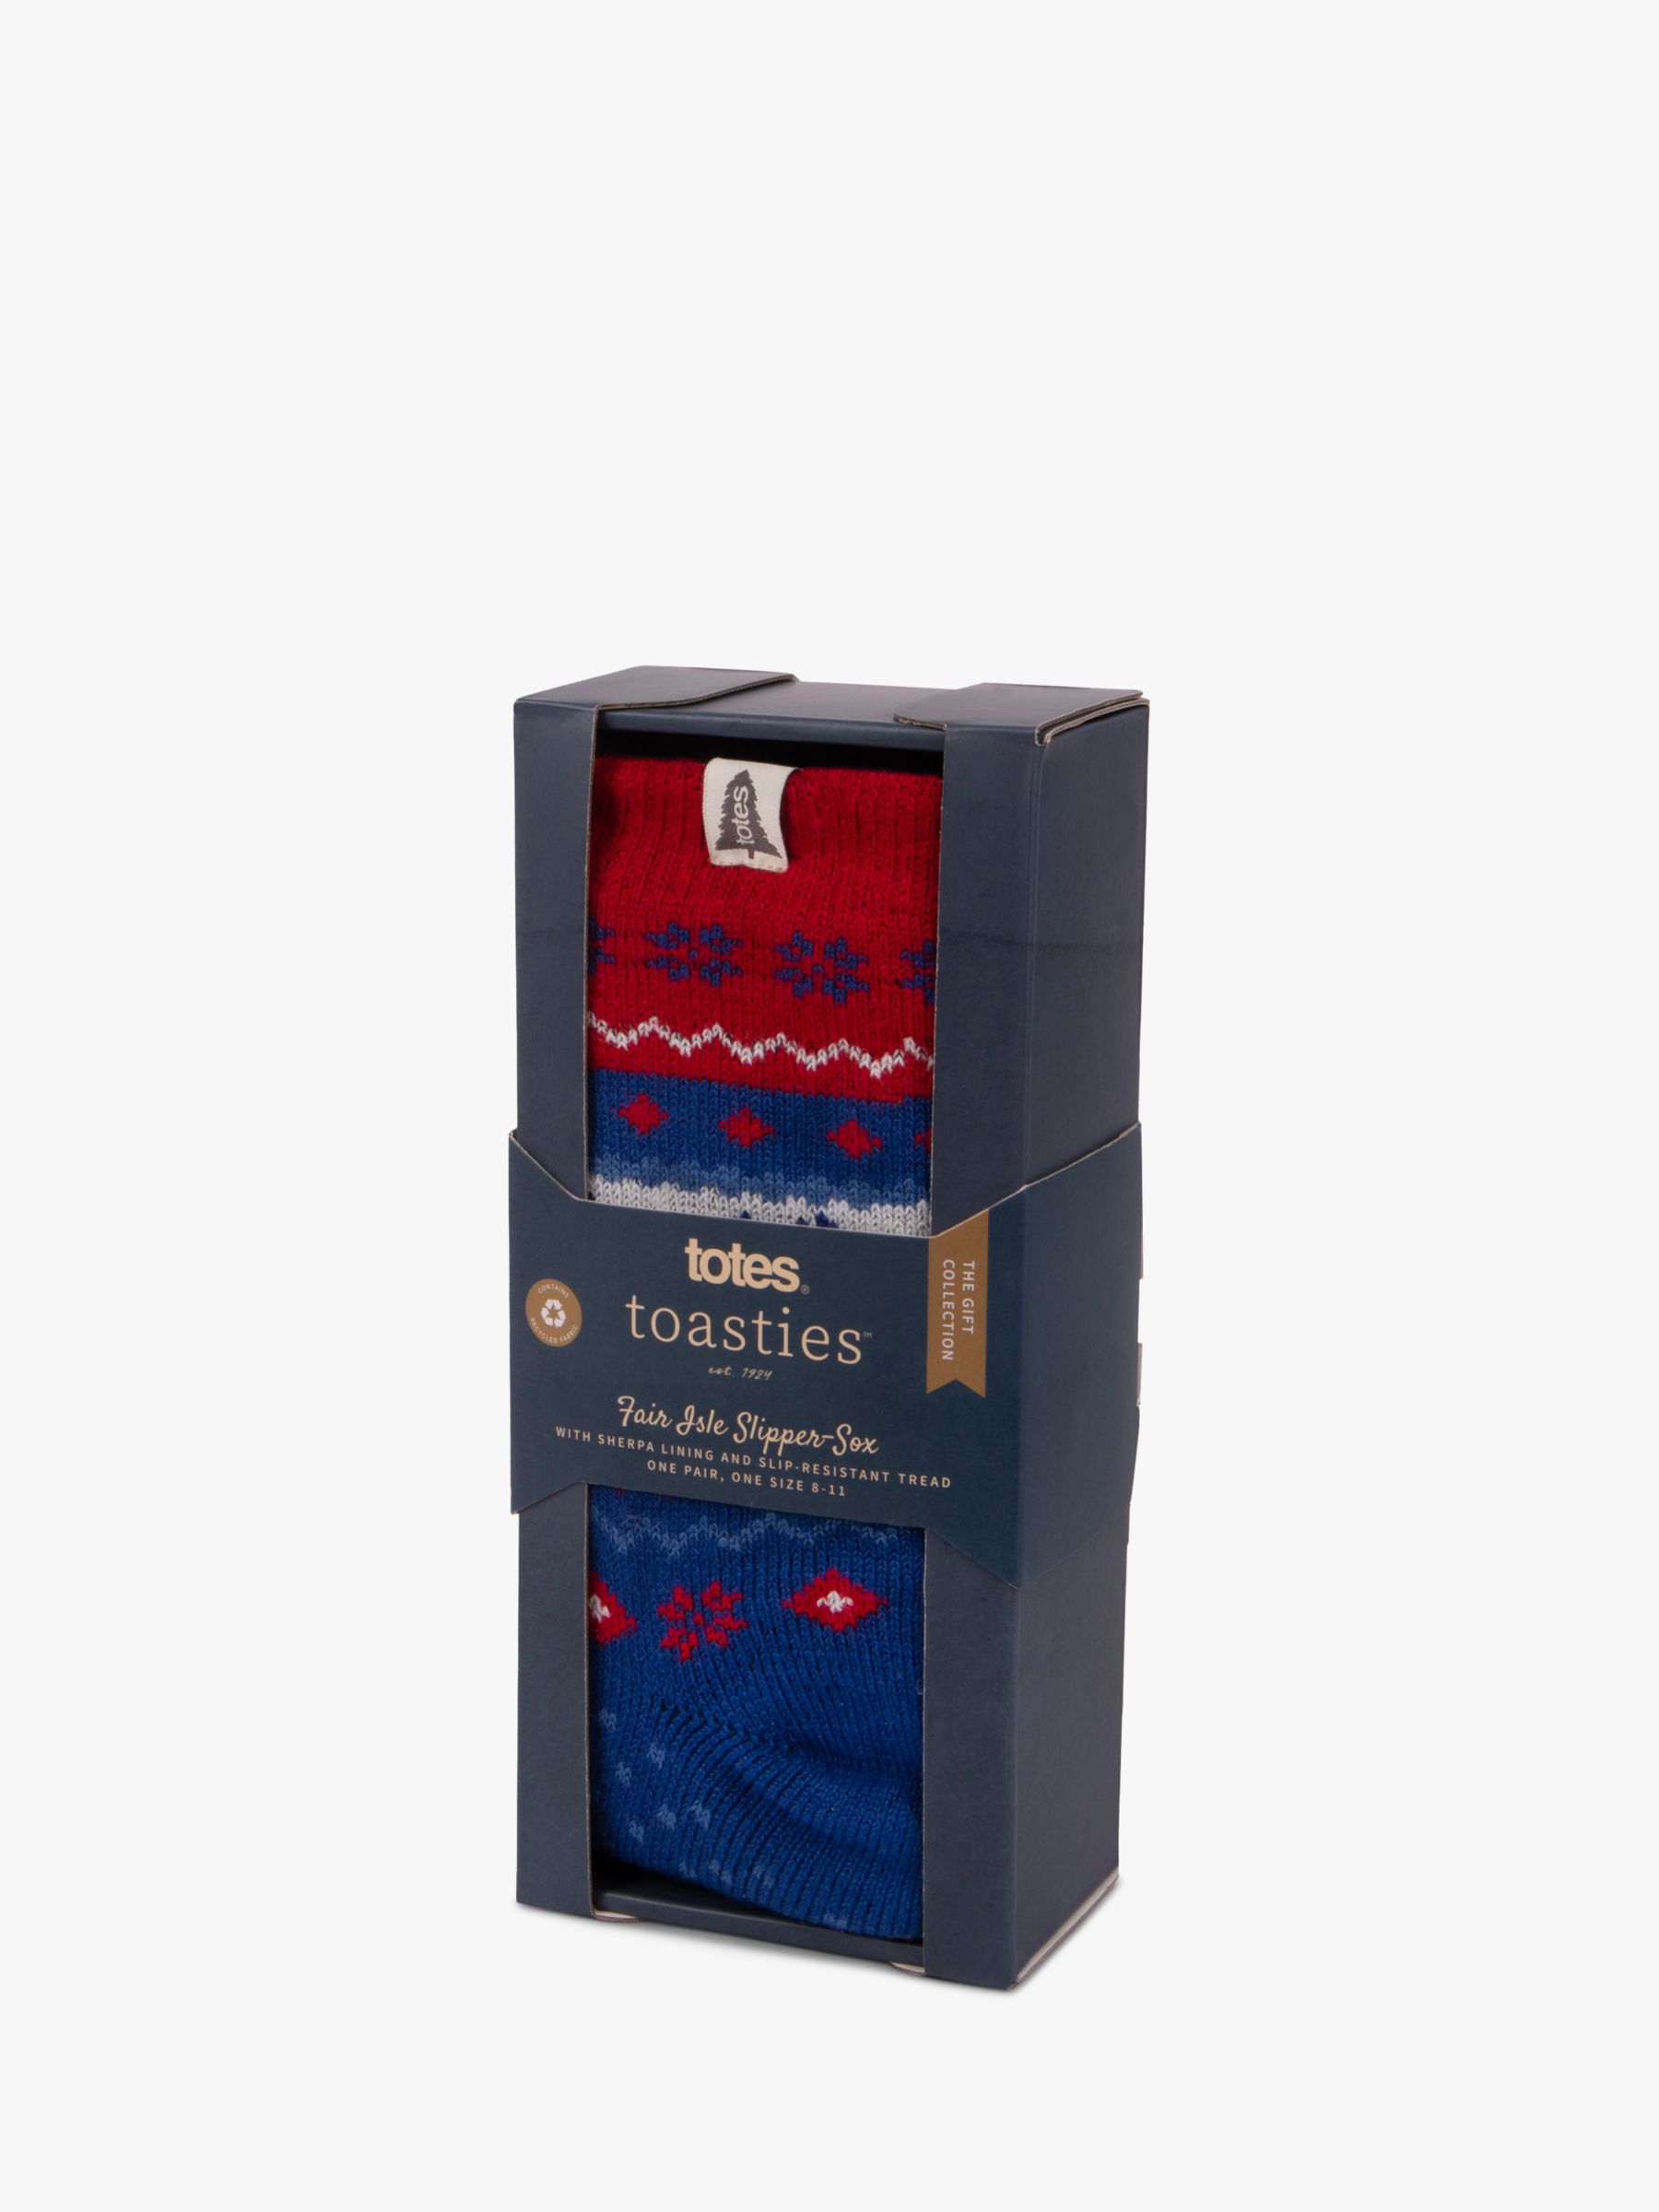 Buy totes toasties Fair Isle Slipper Socks, Blue/Red/White Online at johnlewis.com